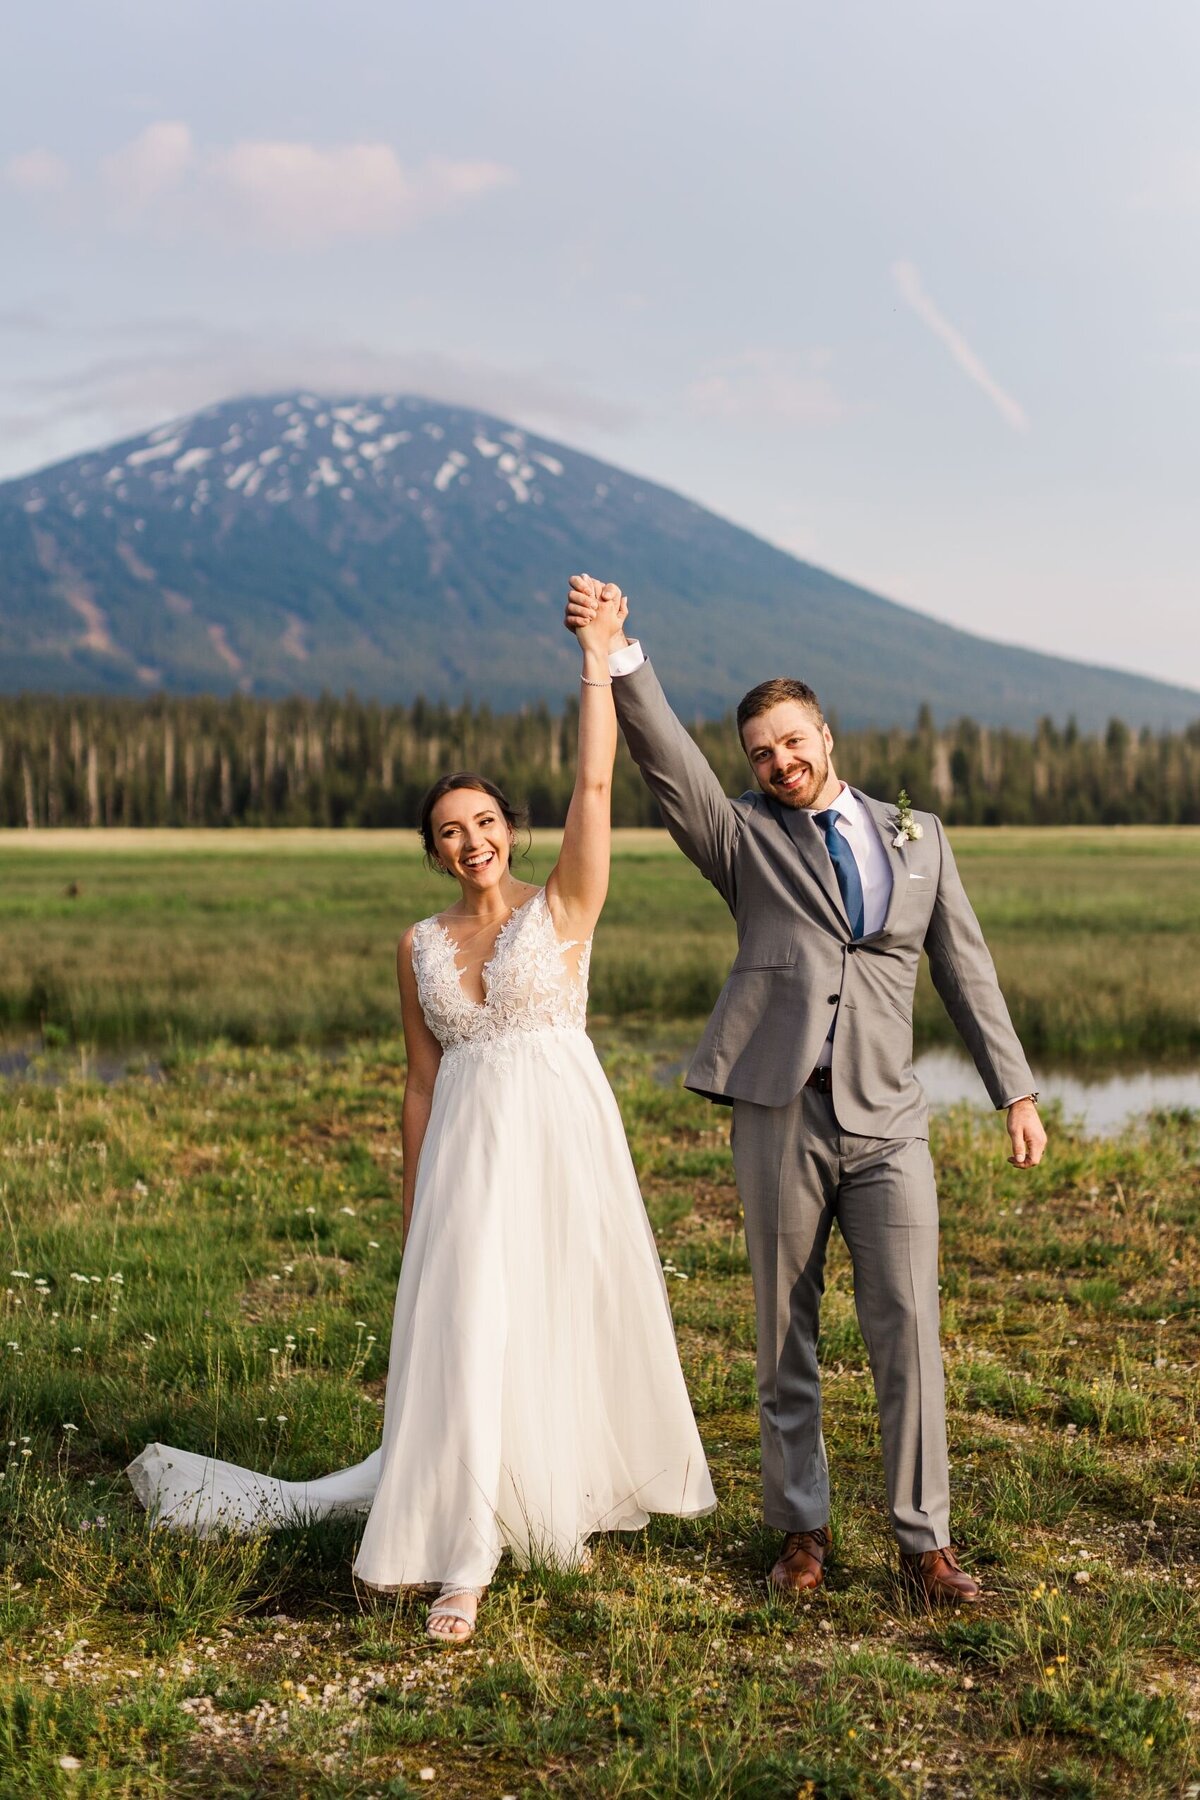 Jessica + Josh - Sparks Lake Wedding 2022 - HANNAH TURNER PHOTOGRAPHY 2022-69